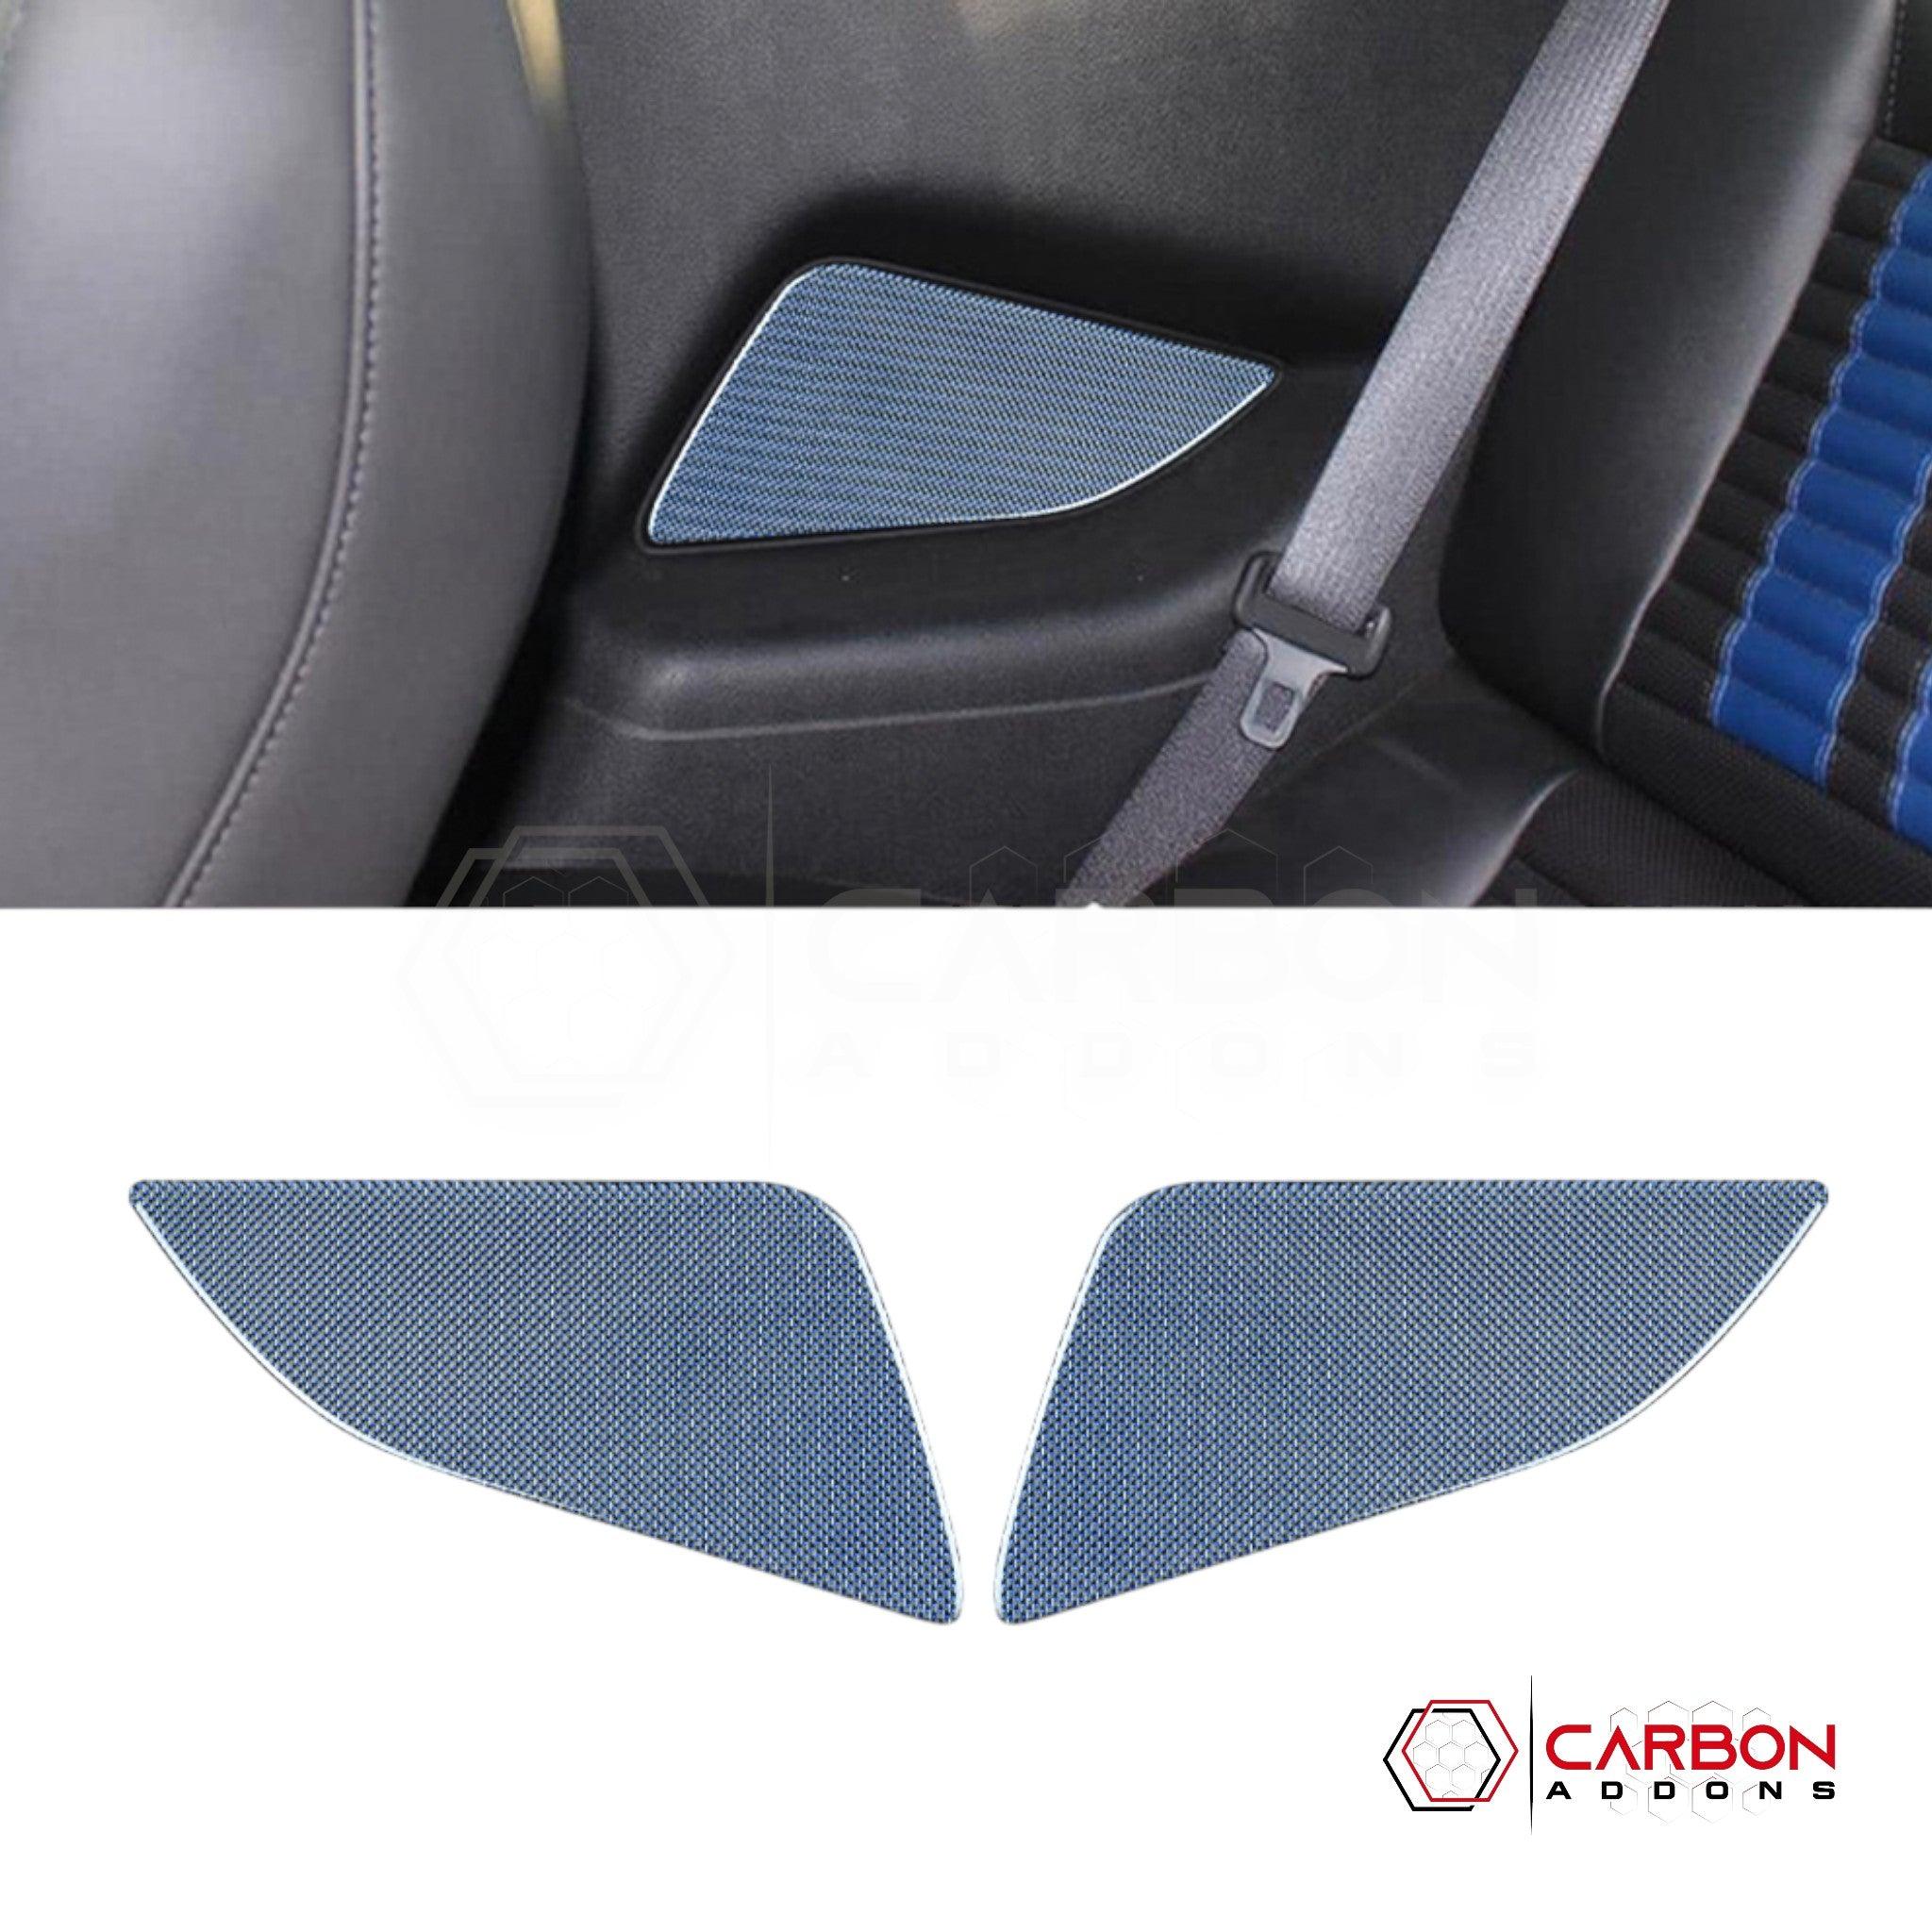 Mustang 2010-2014 Reflective Carbon Fiber Rear Seat Arm Rest Trim Overlay - carbonaddons Carbon Fiber Parts, Accessories, Upgrades, Mods